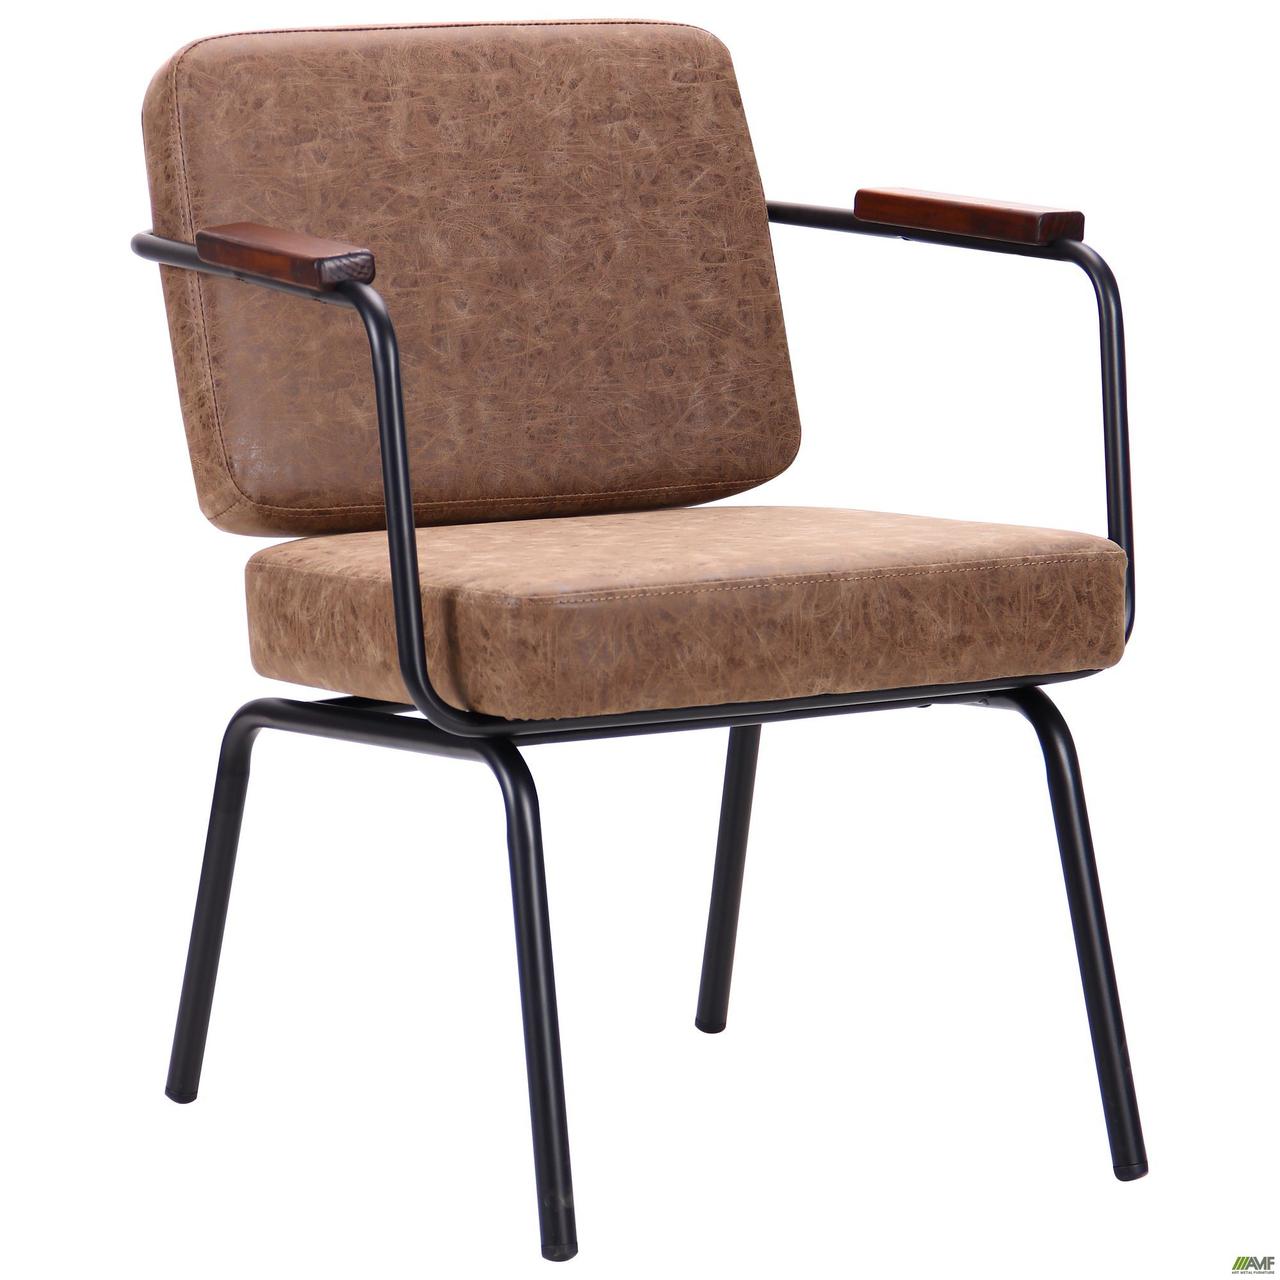 М'яке крісло АМФ Oasis коричневе для кафе-ресторану в стилі Лофт